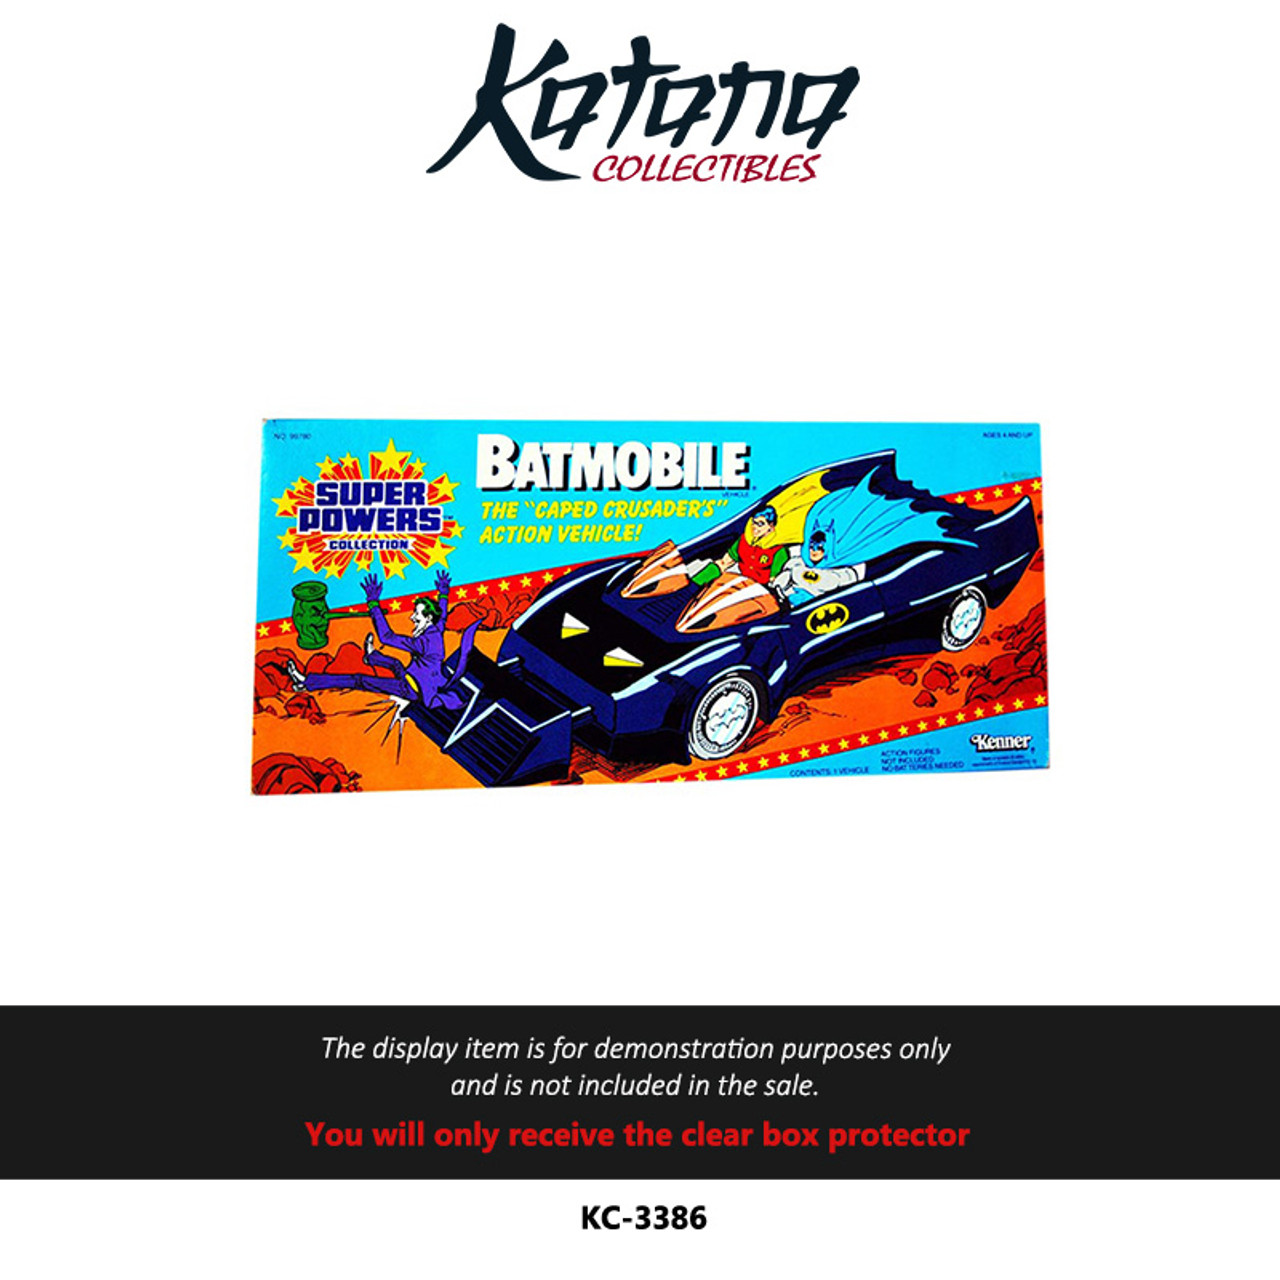 Katana Collectibles Protector For Super Powers Batmobile Box